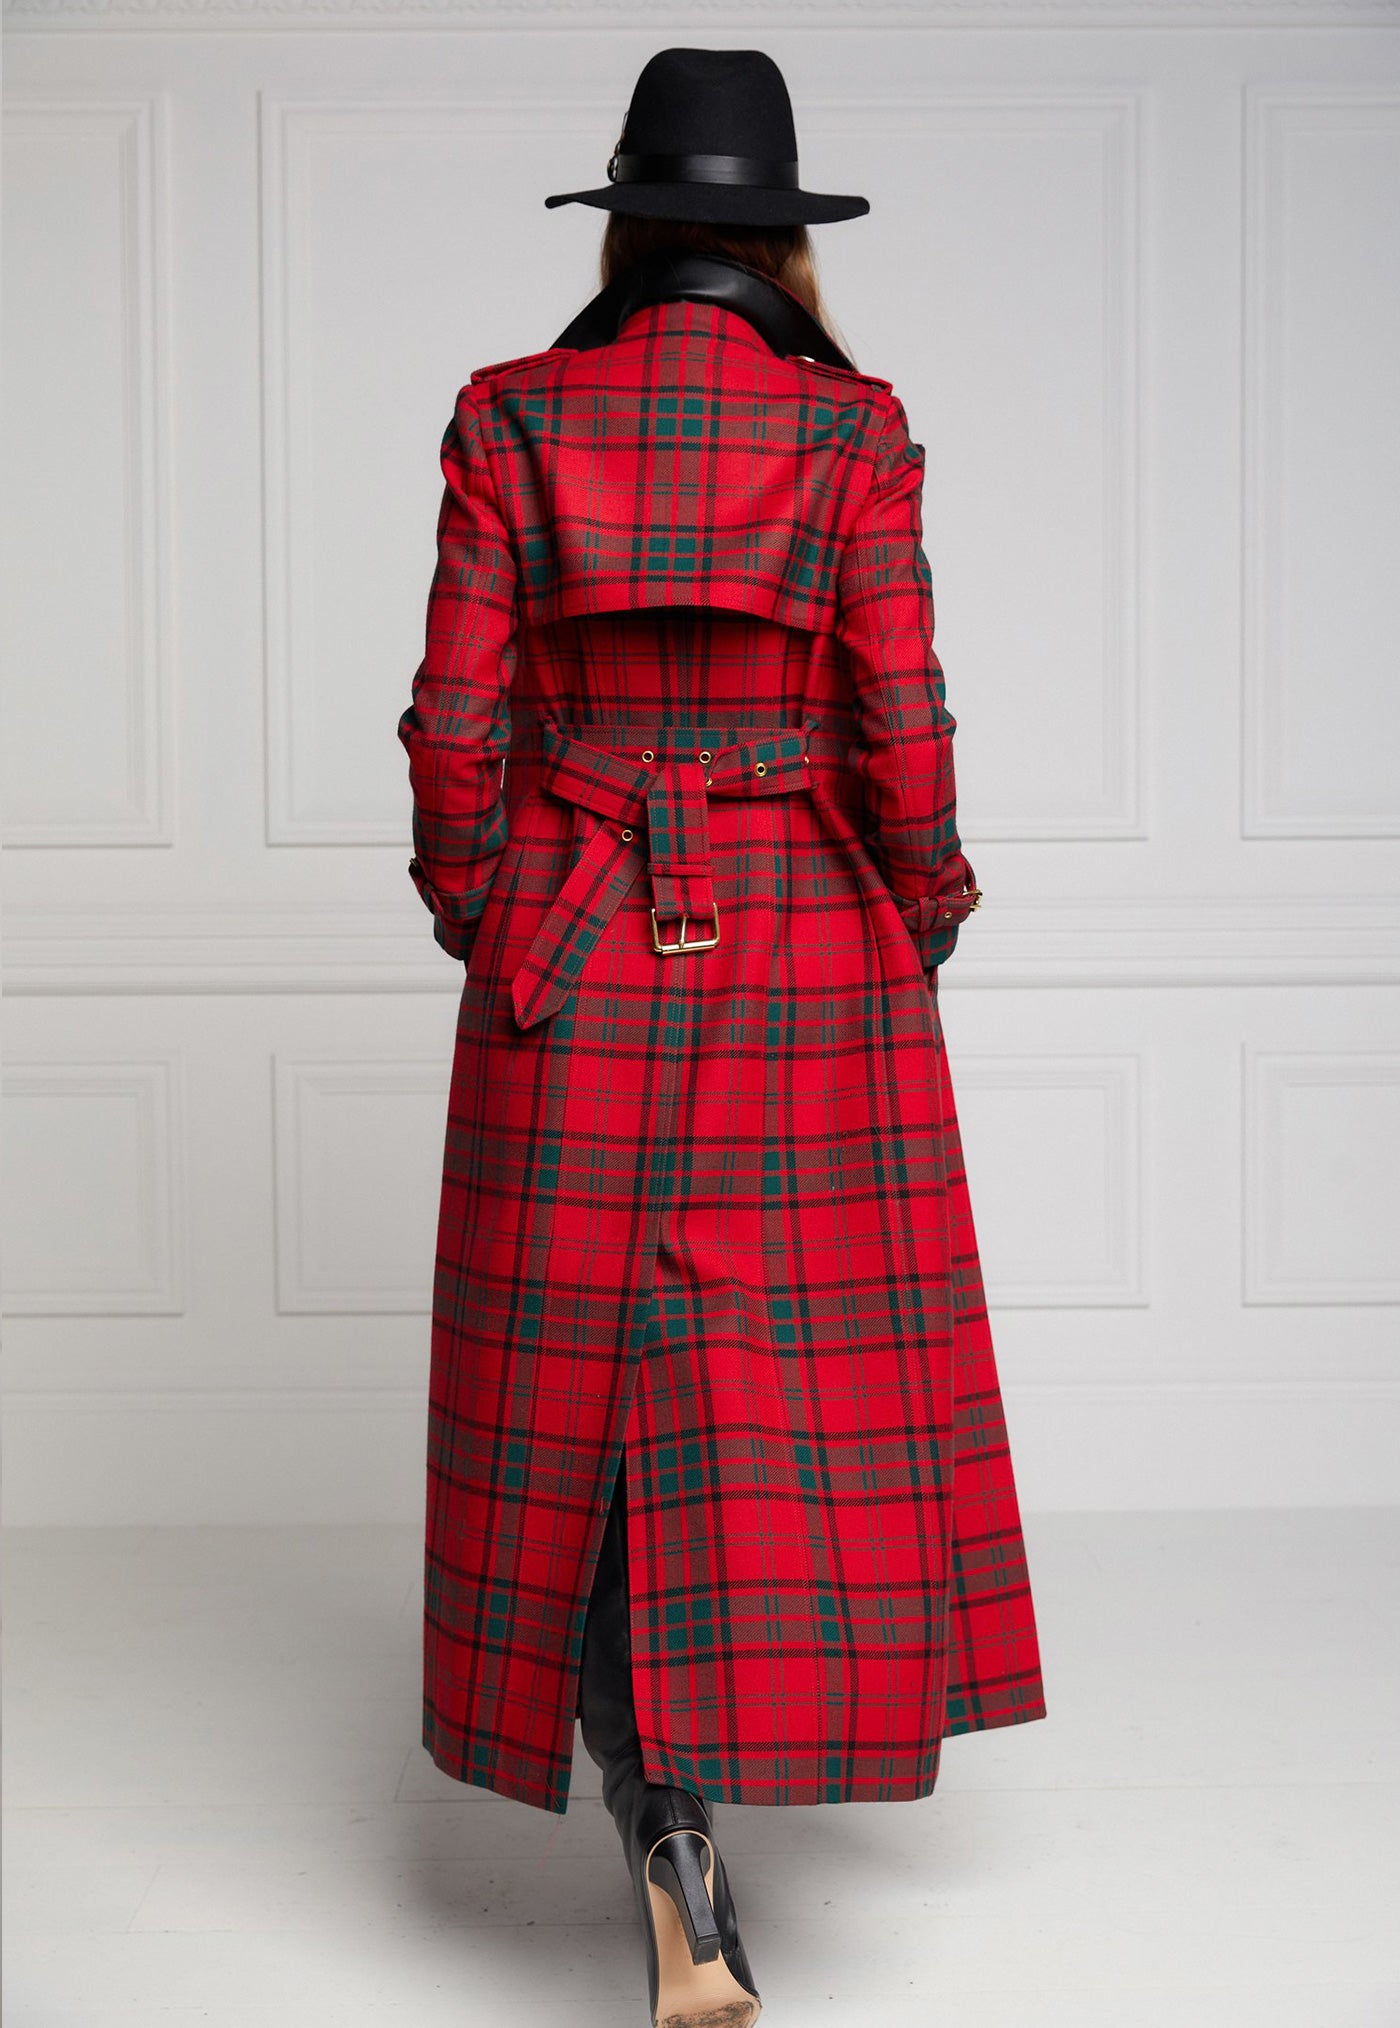 Marlborough Trench Coat Full Length - Red Tartan sold by Angel Divine